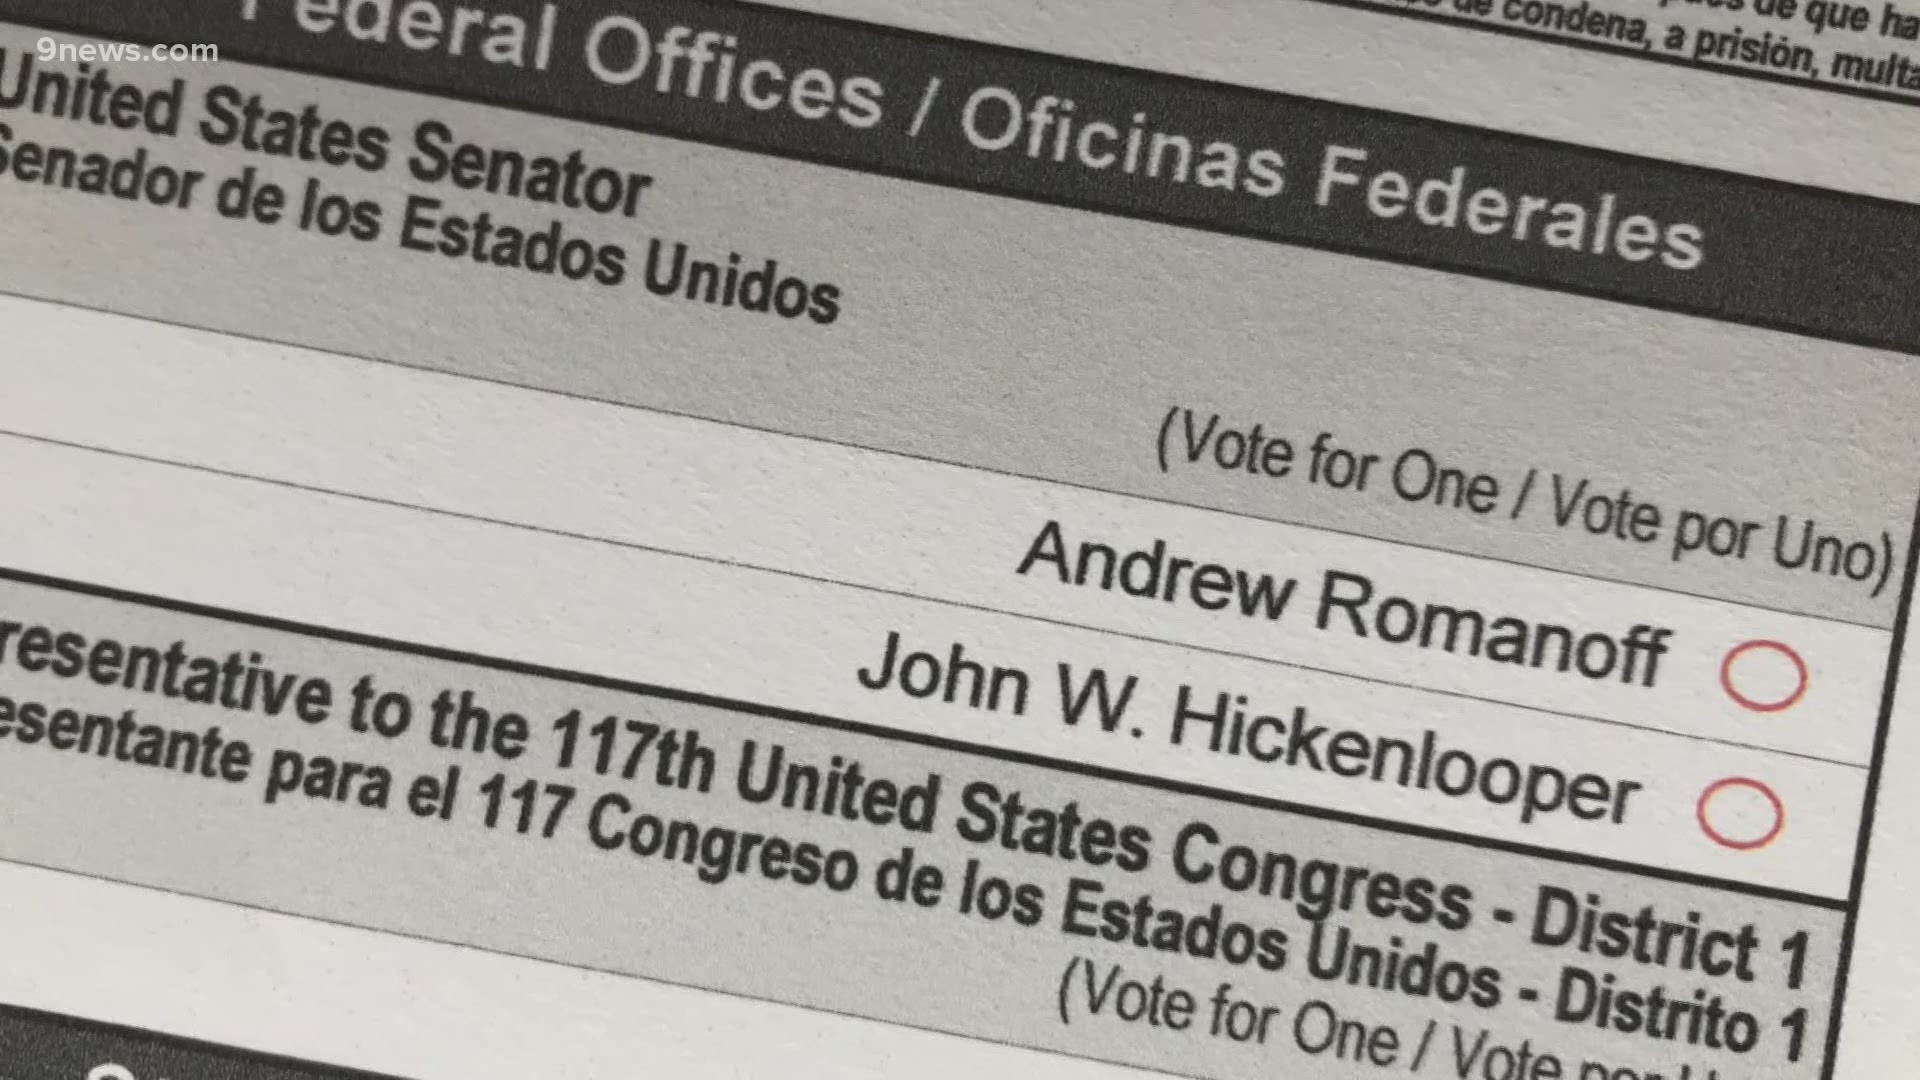 A 9NEWS/ColoradoPolitics.com poll found that despite recent missteps, Colorado voters still favor John Hickenlooper in the Democratic primary.